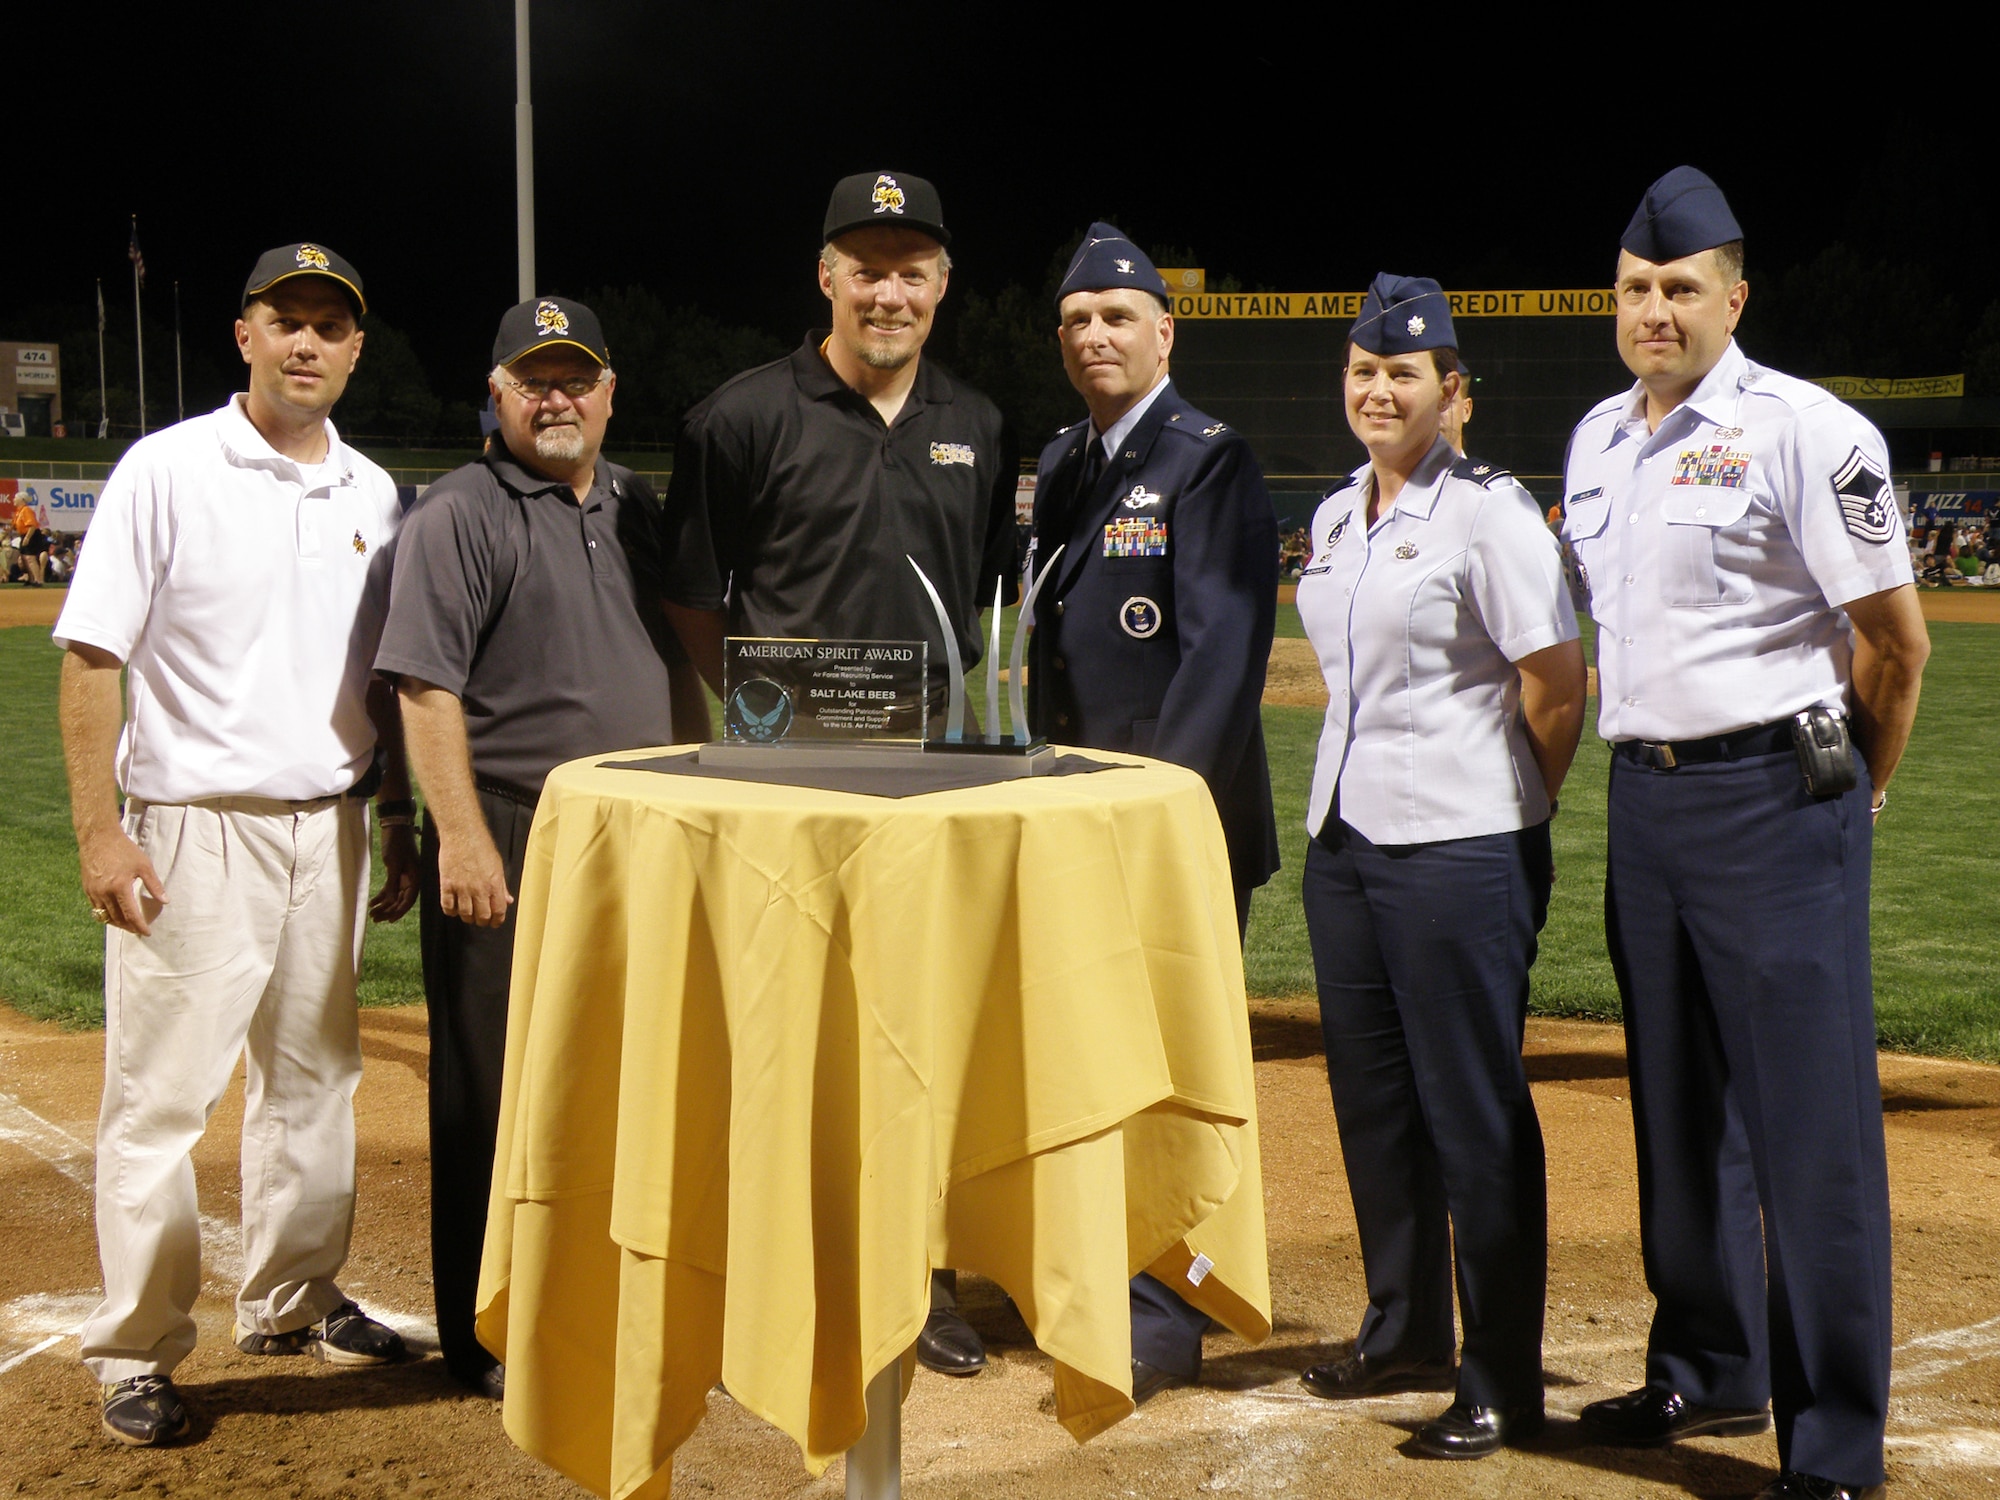 Their American Spirit earns Salt Lake Bees baseball team Air Force award  > Air Education and Training Command > Article Display